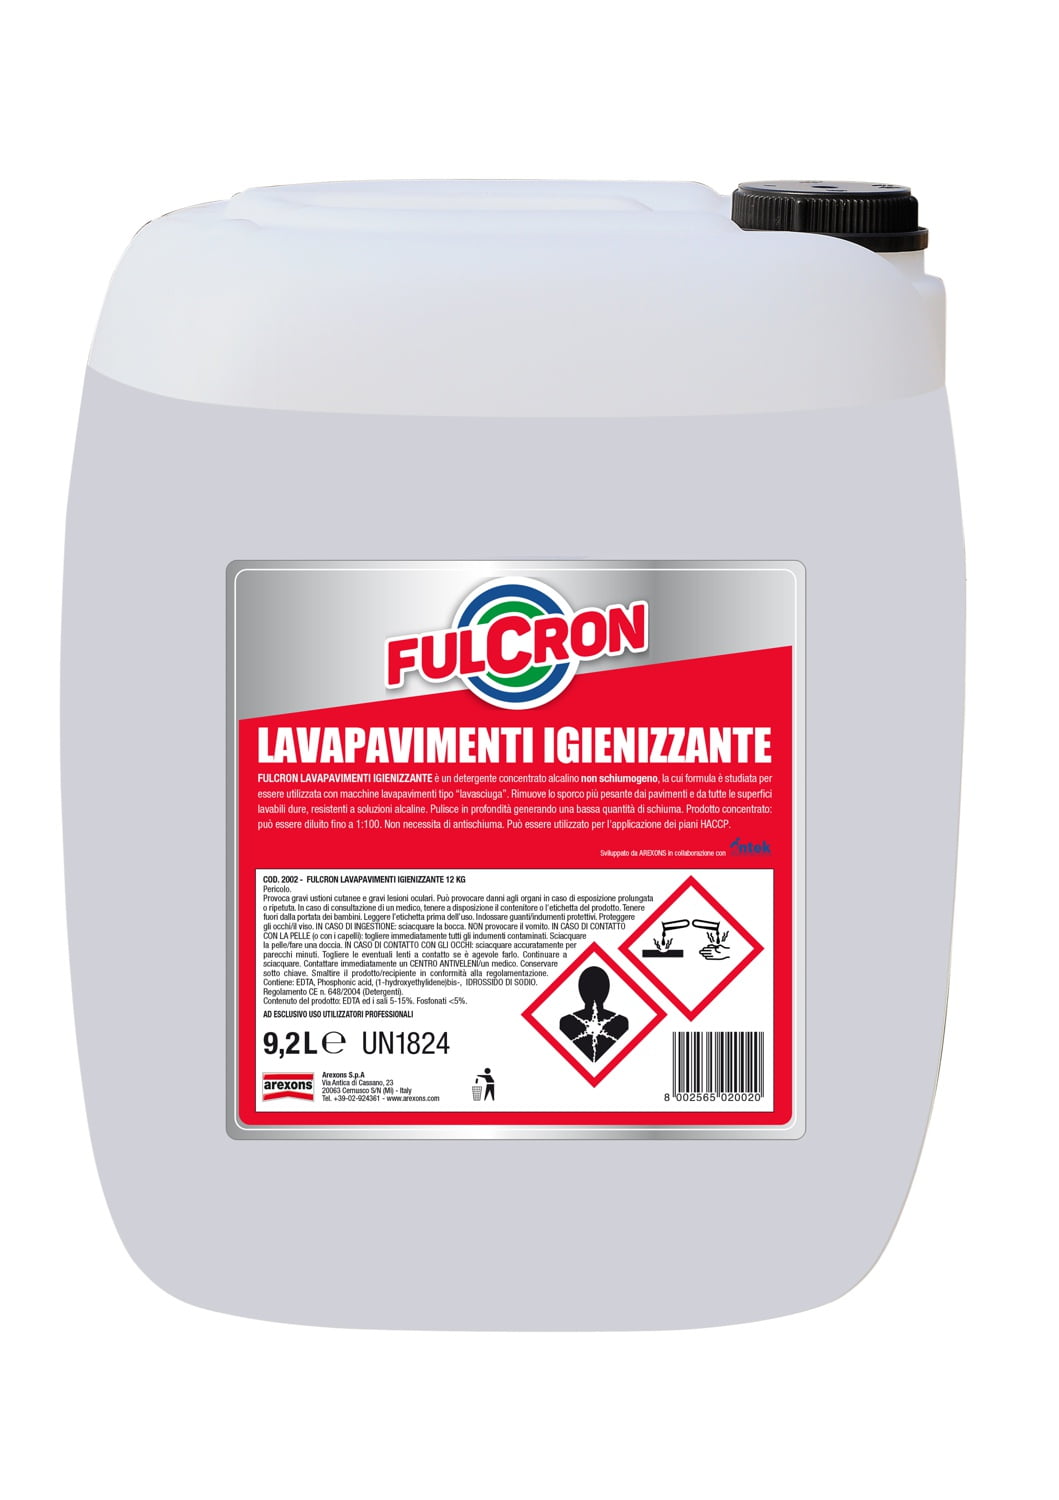 Fulcron Lavapavimenti Igienizzante - Fulcron